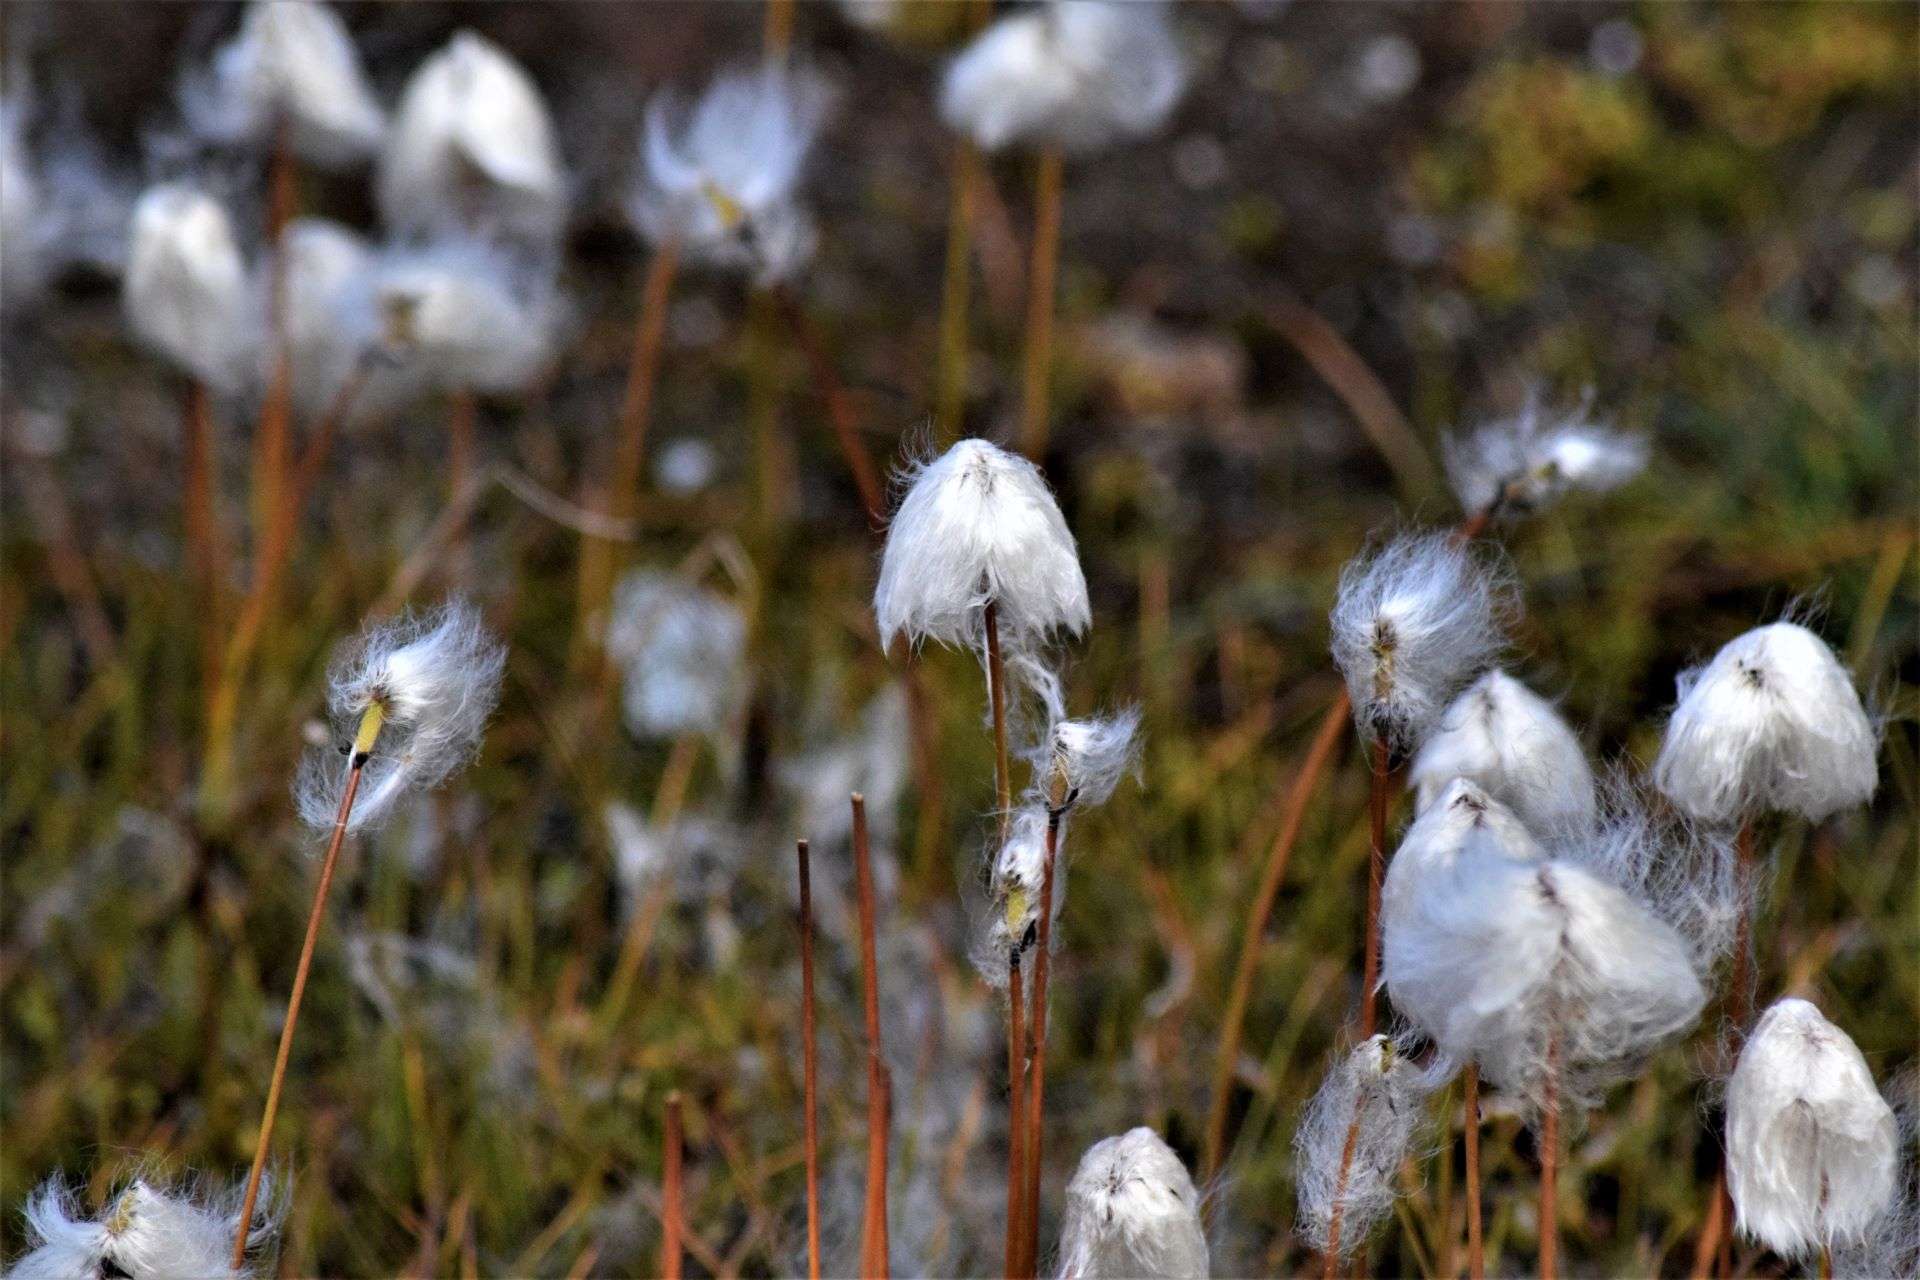 Arctic Cotton grass